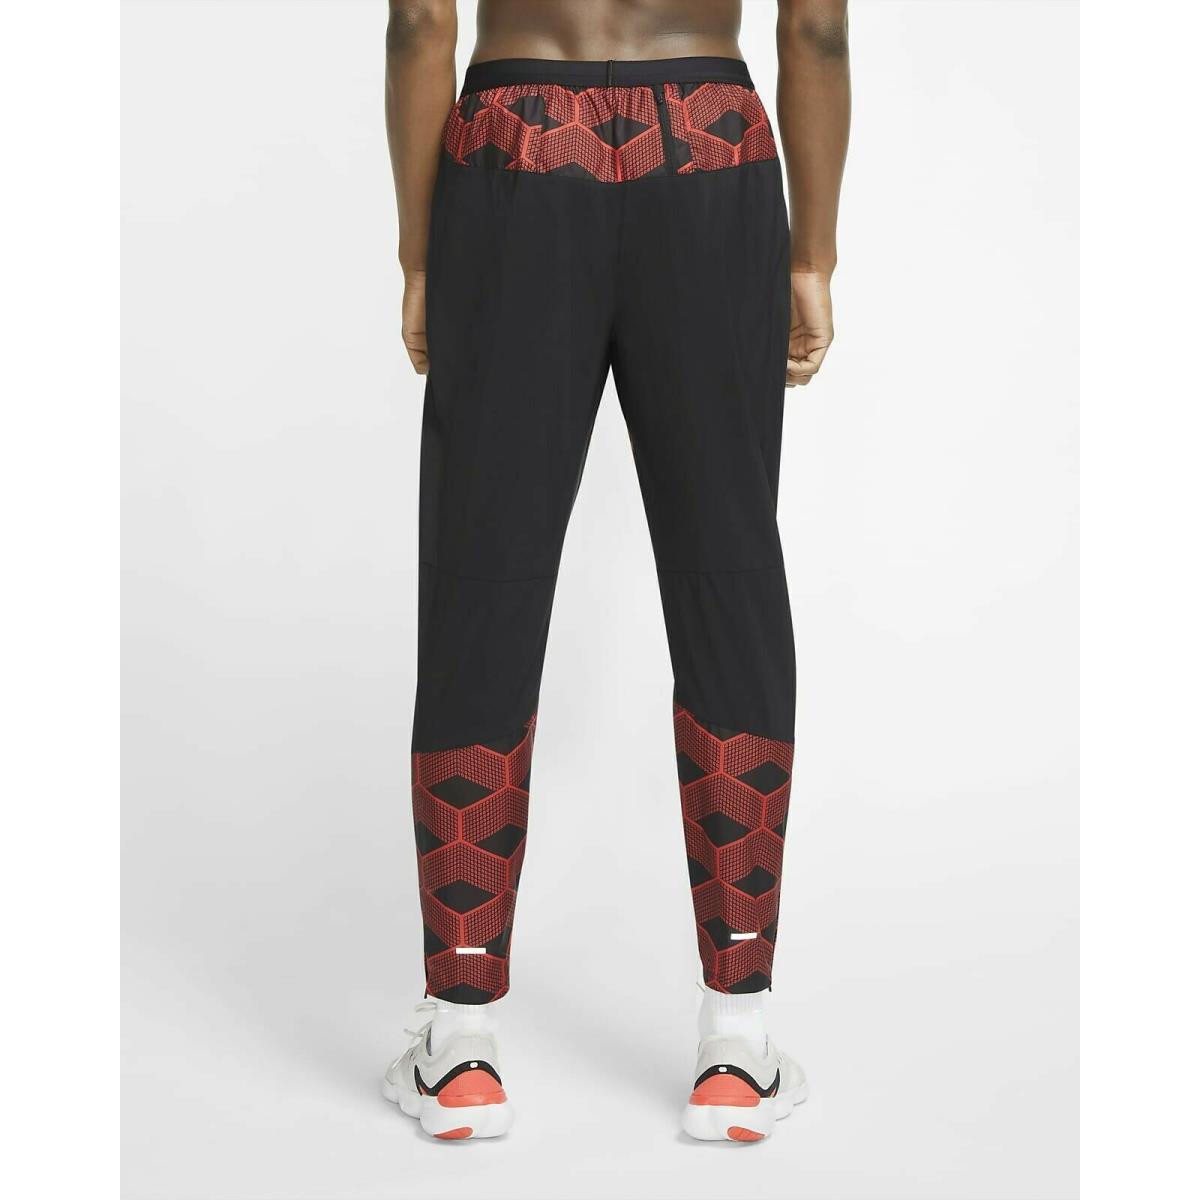 Nike clothing Pro Running - Red 0